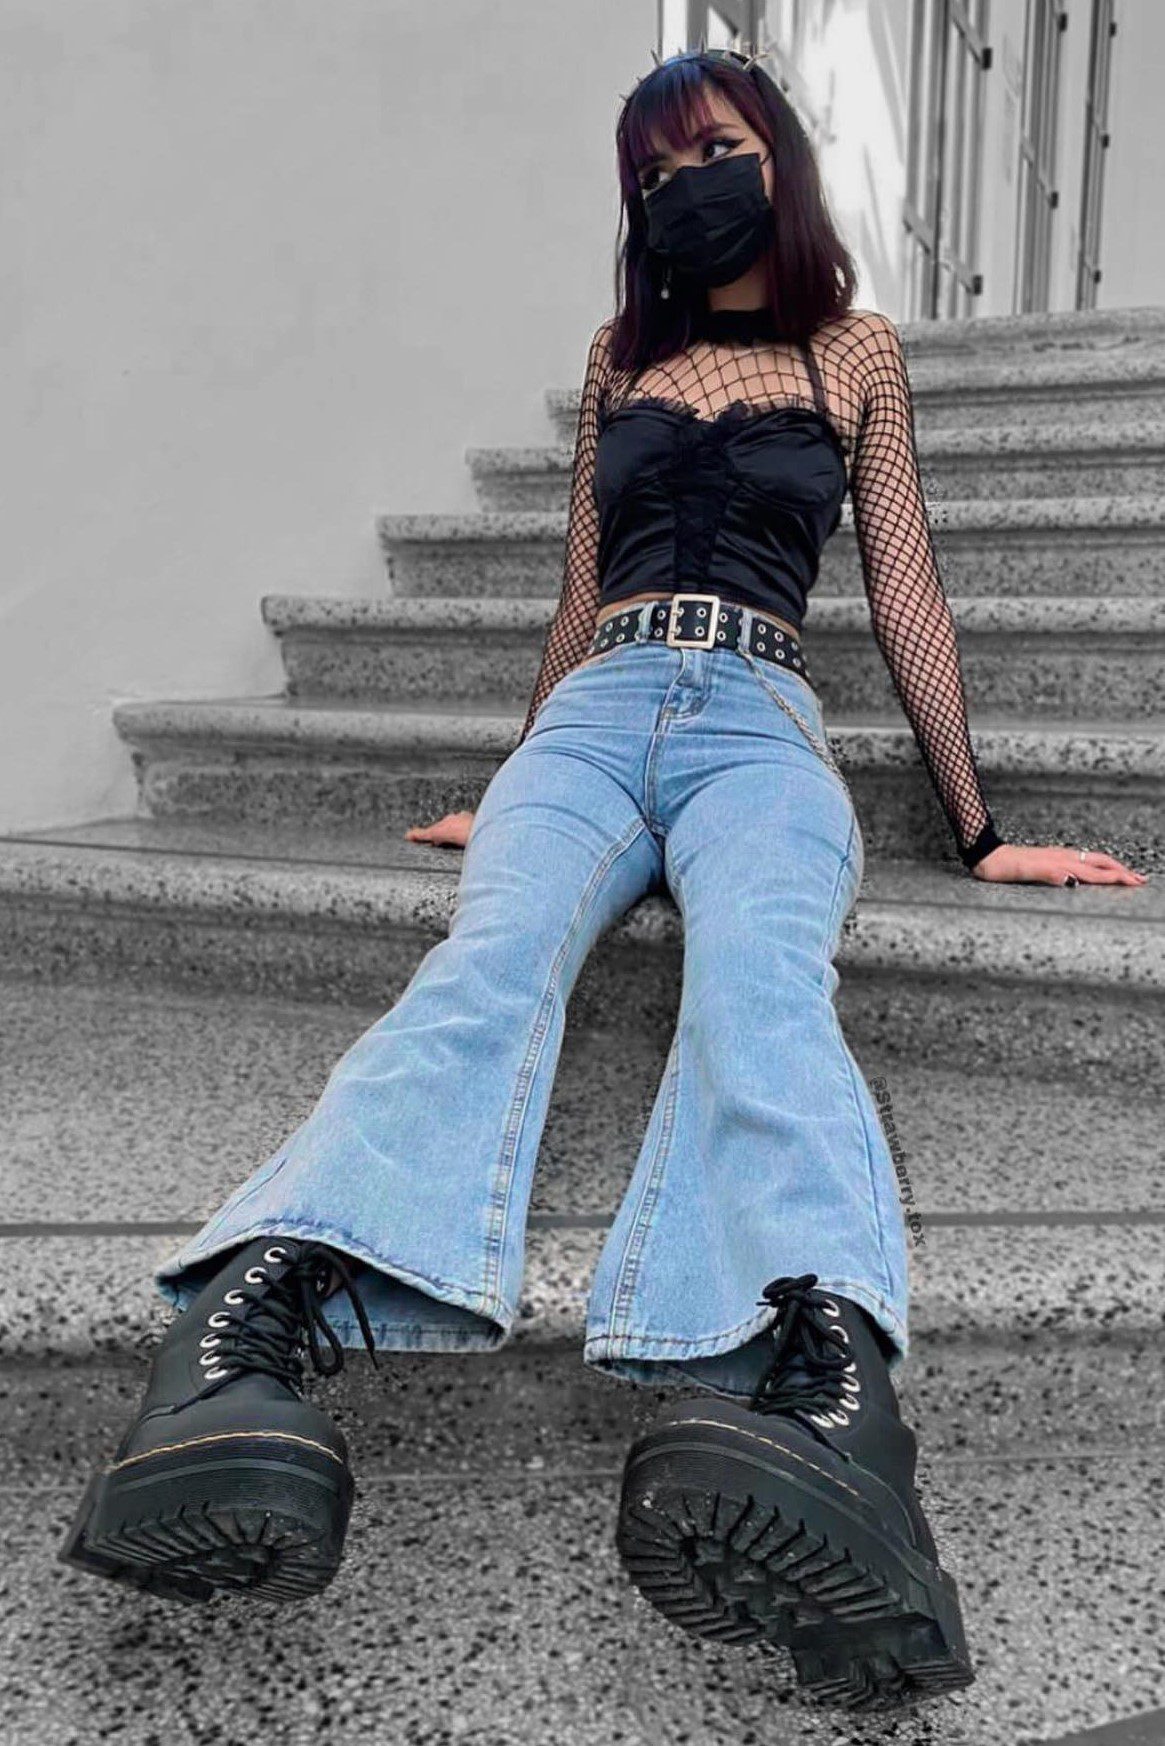 90s Grunge Aesthetic Fashion Style Looks